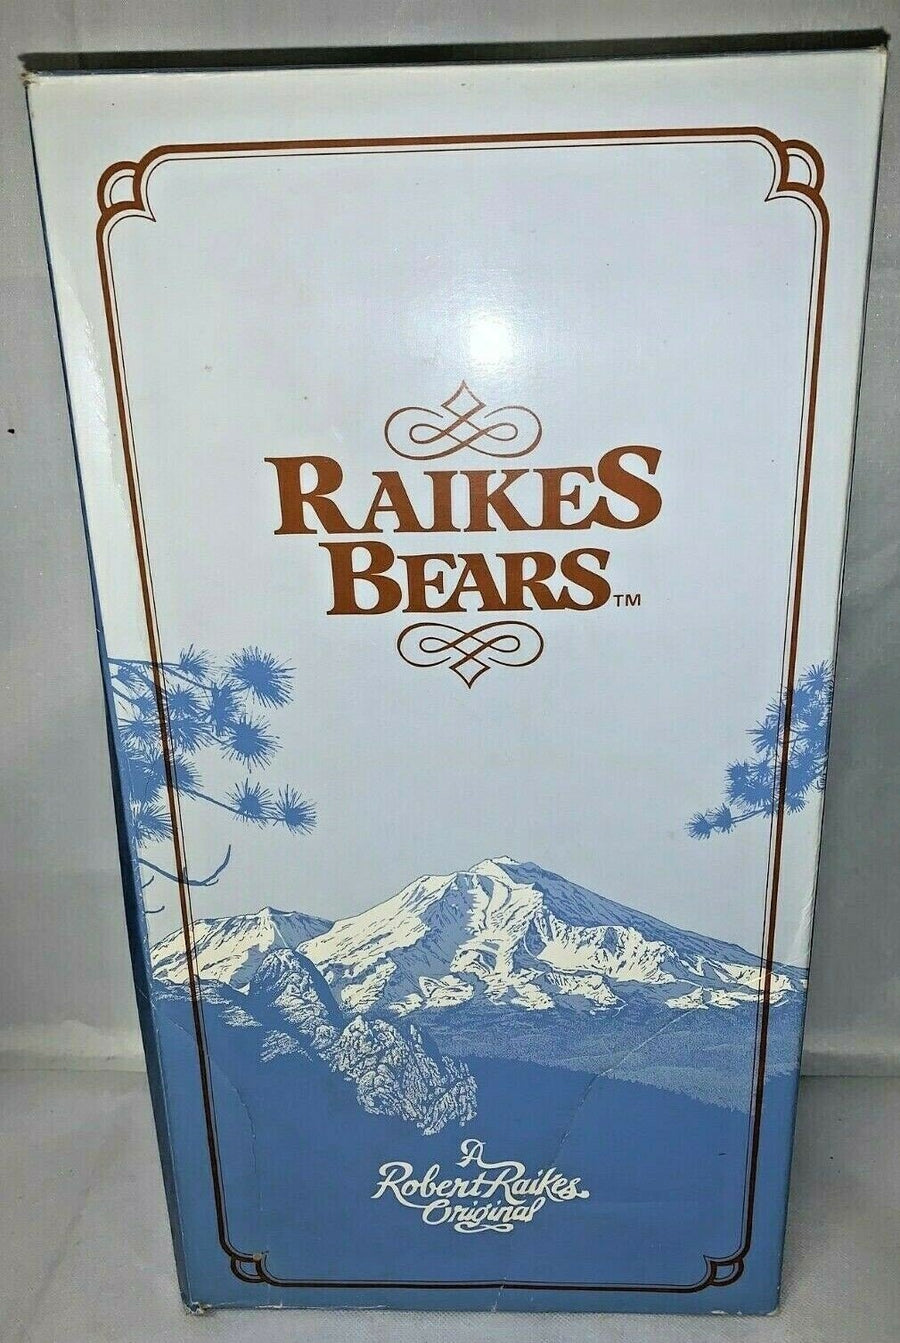 Raikes Bears a Robert Raikes Original #5449 Eric New in Box